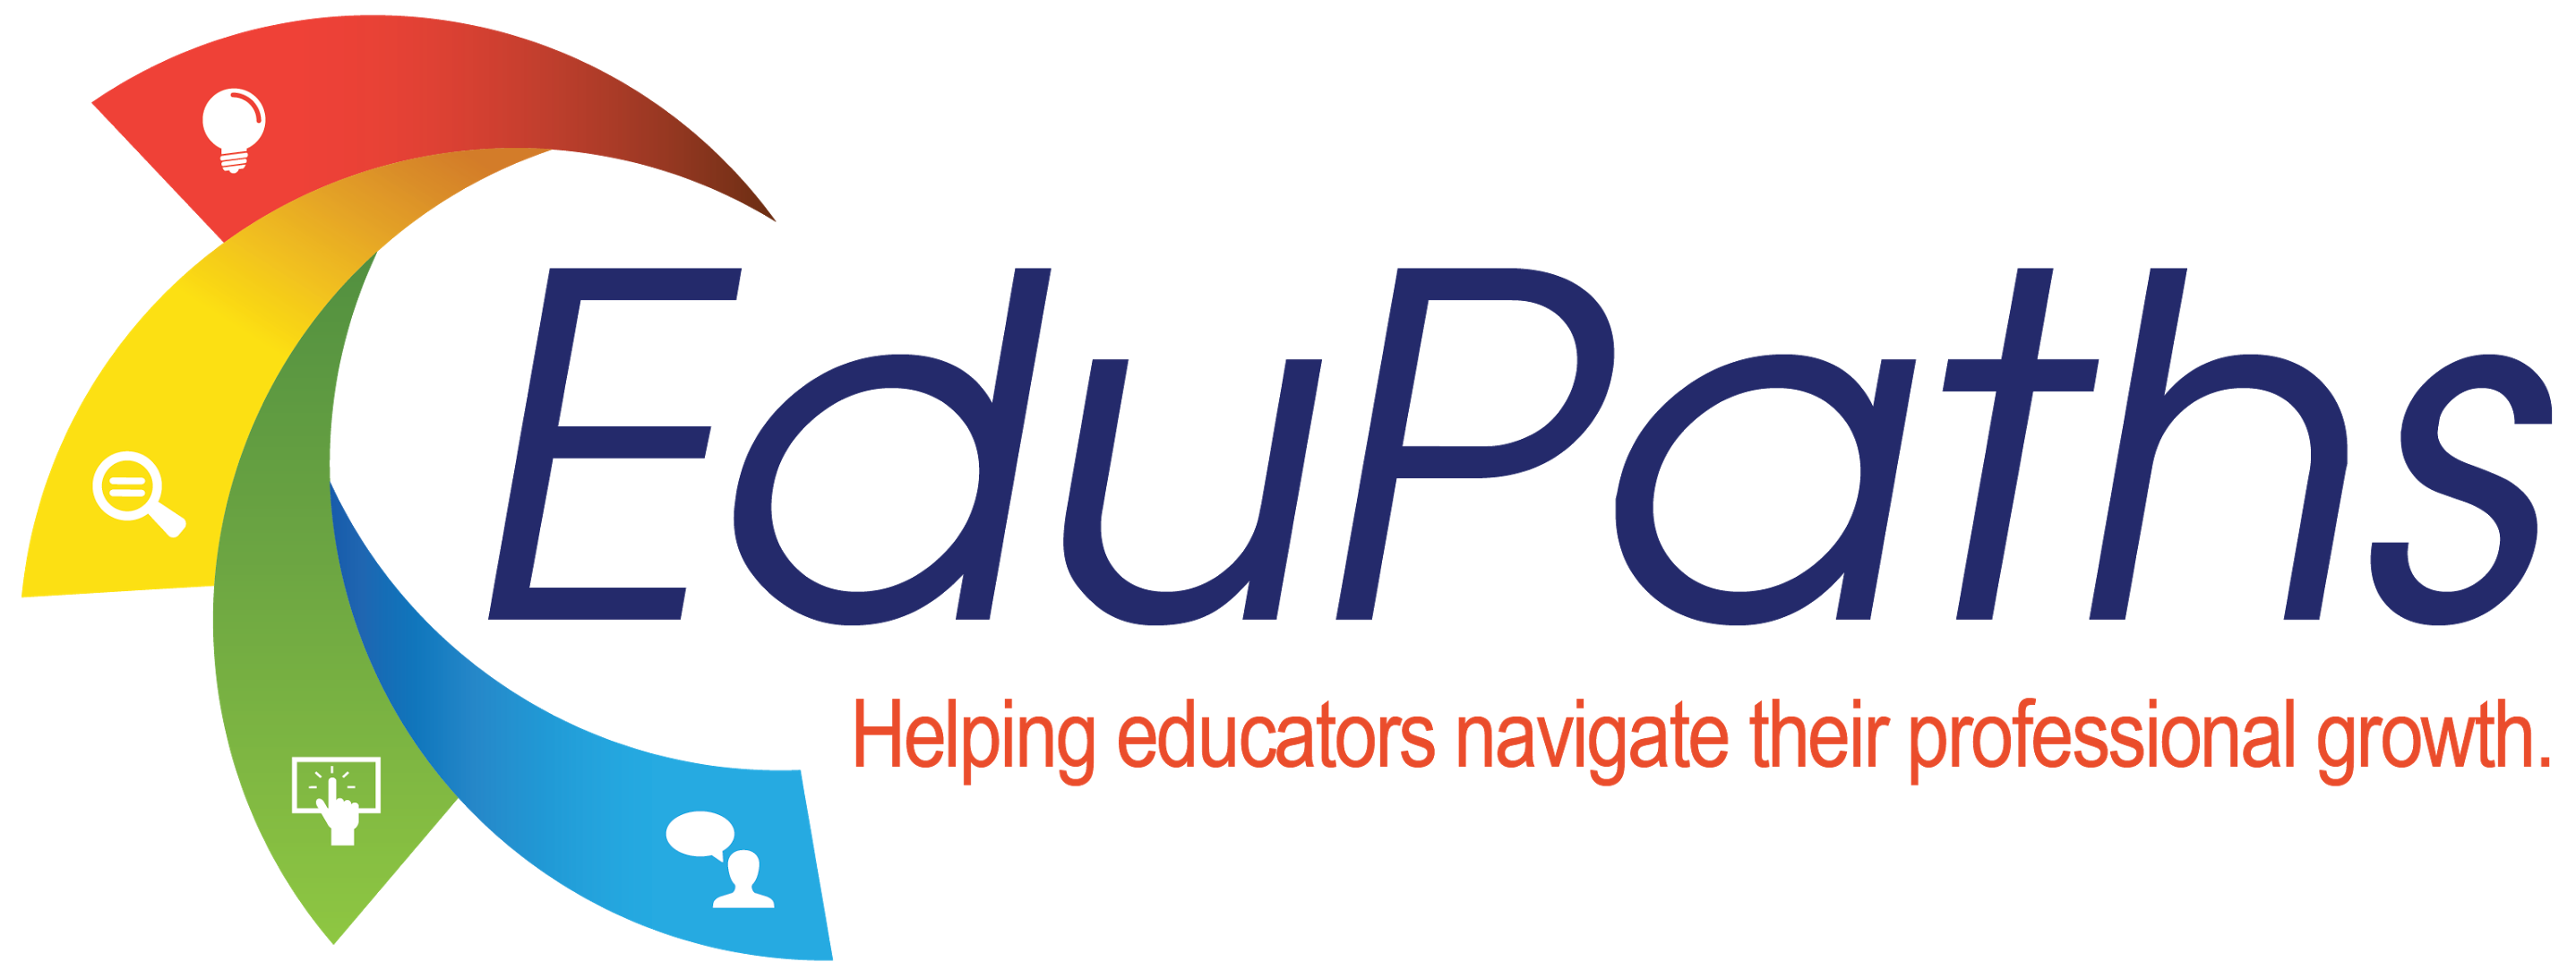 EduPaths Logo Image